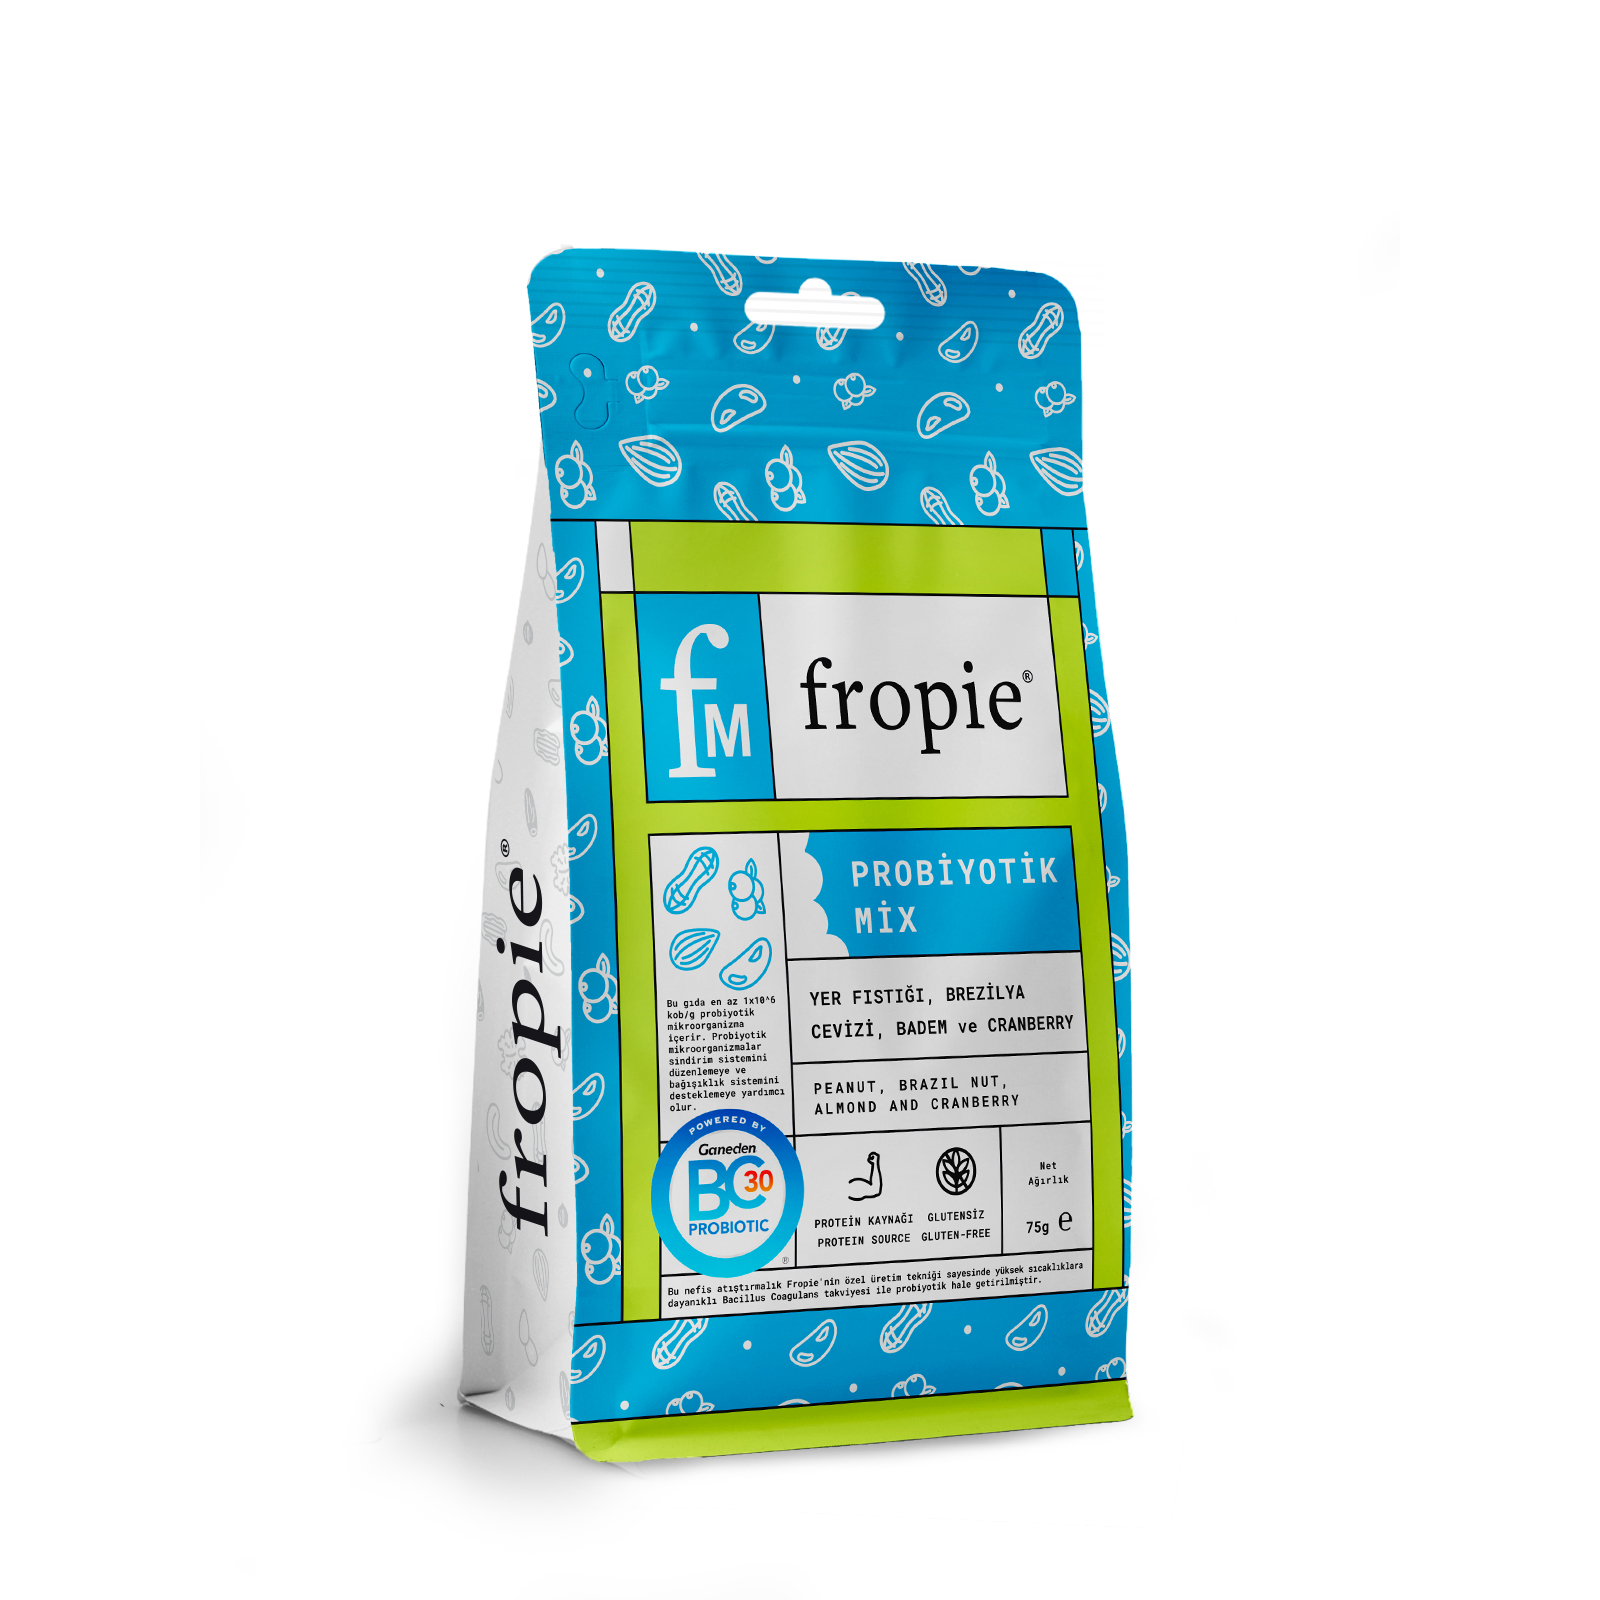 Fropie Probiyotik Mix 75 G